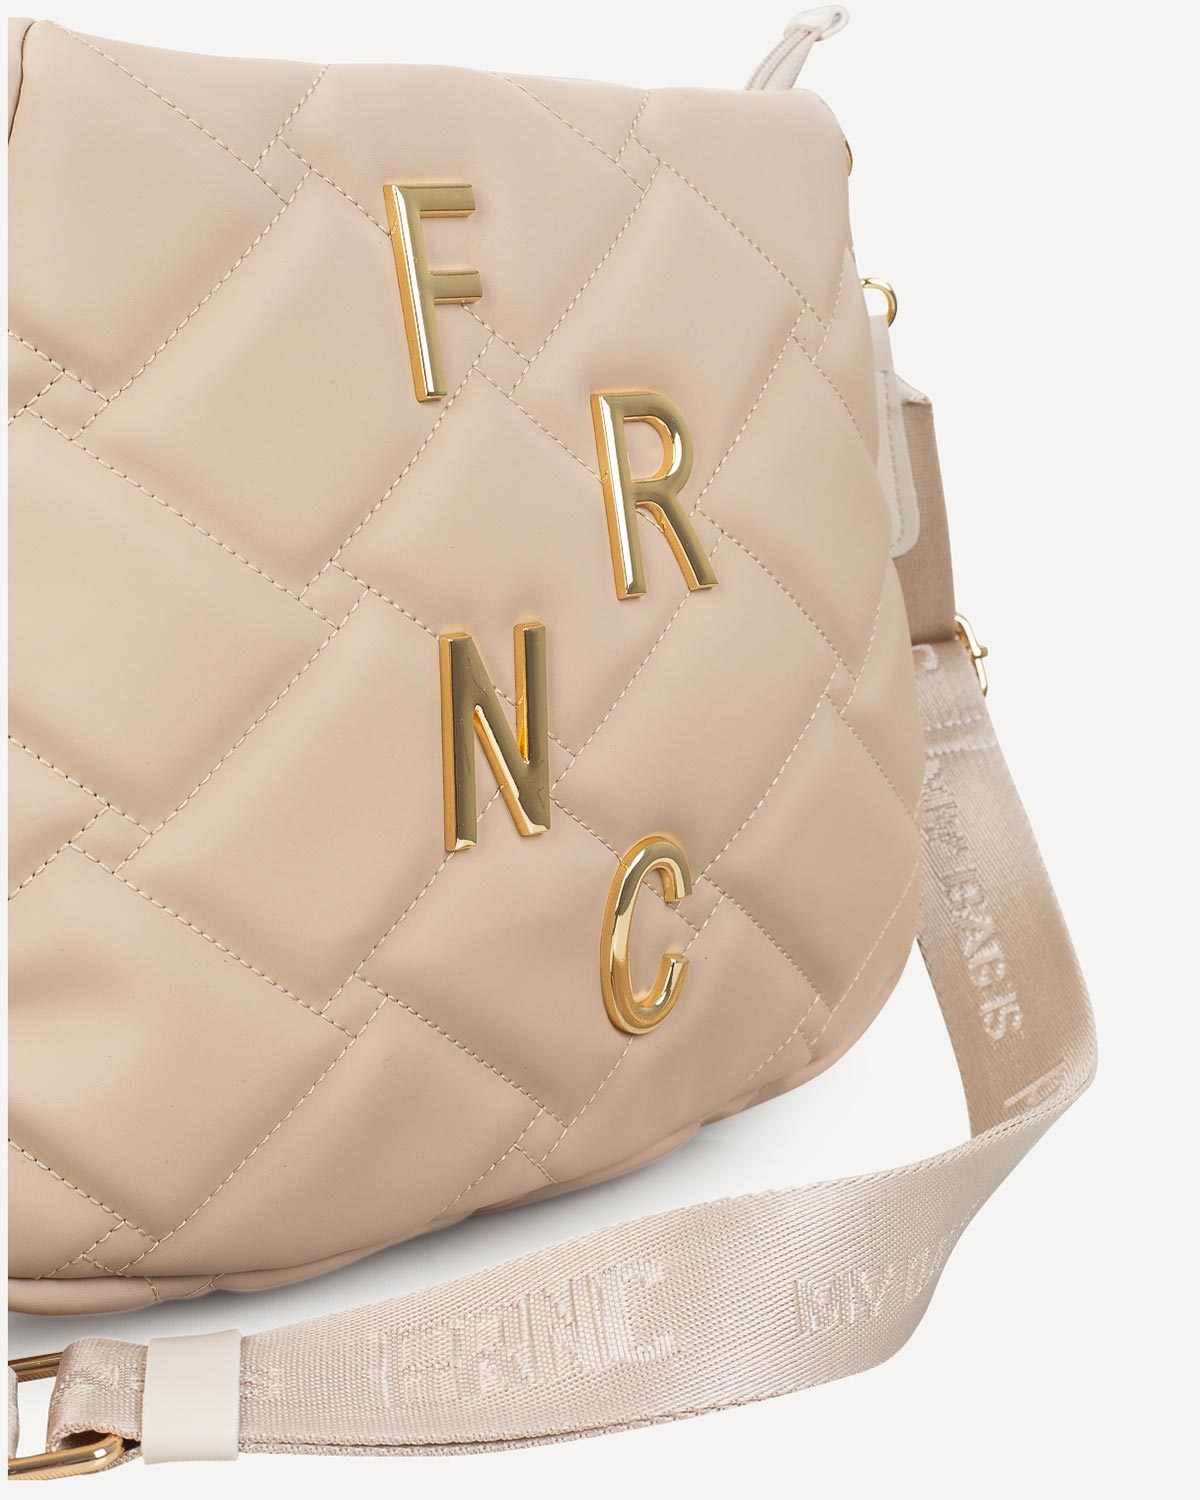 FRNC Γυναικεία Τσάντα Ώμου  4807  Collection SS2024